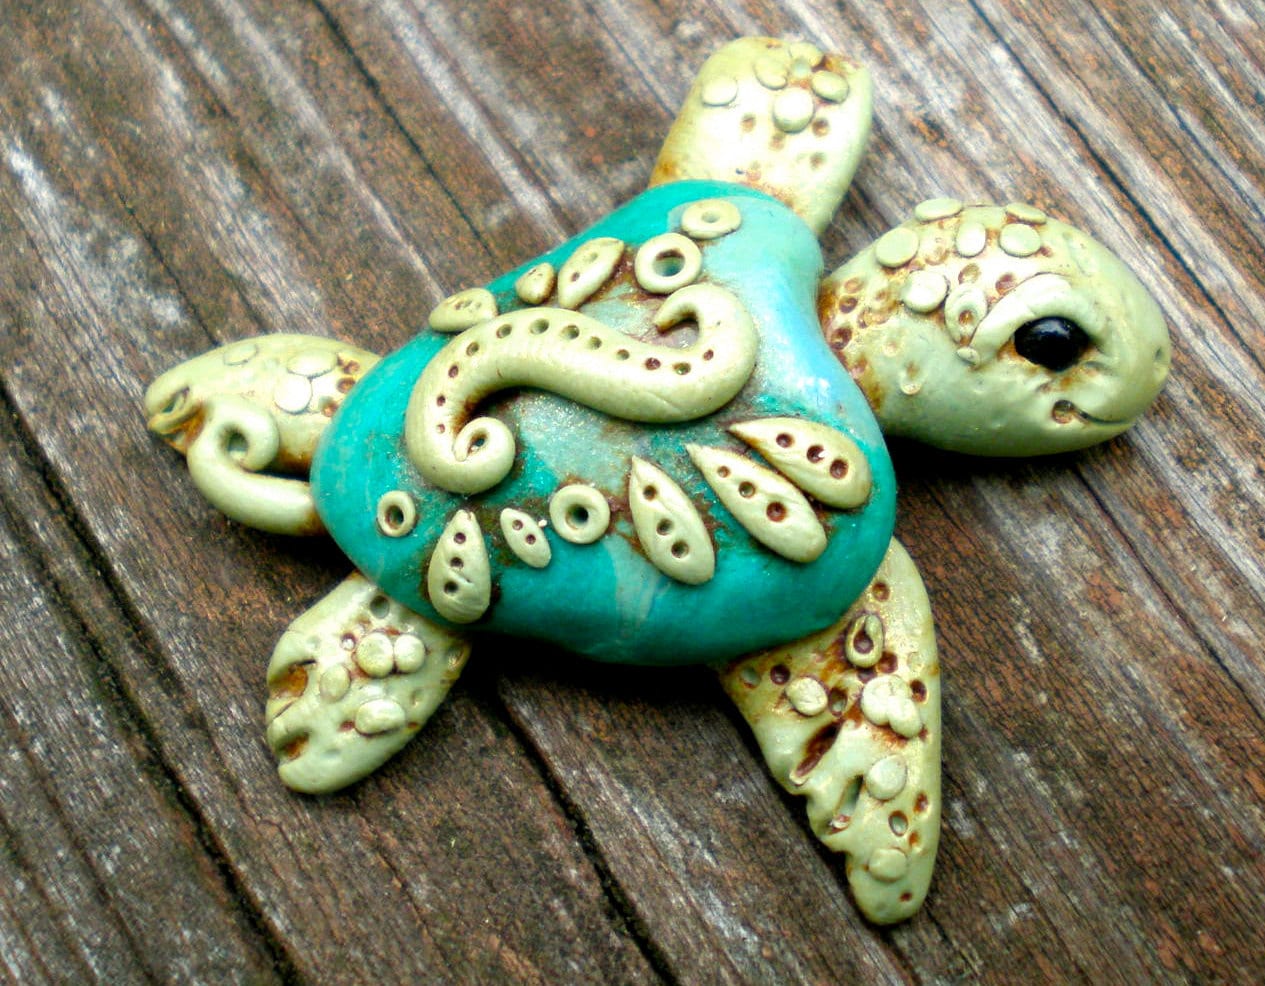 Polymer clay Sea Turtle bead/pendant by darbella designs